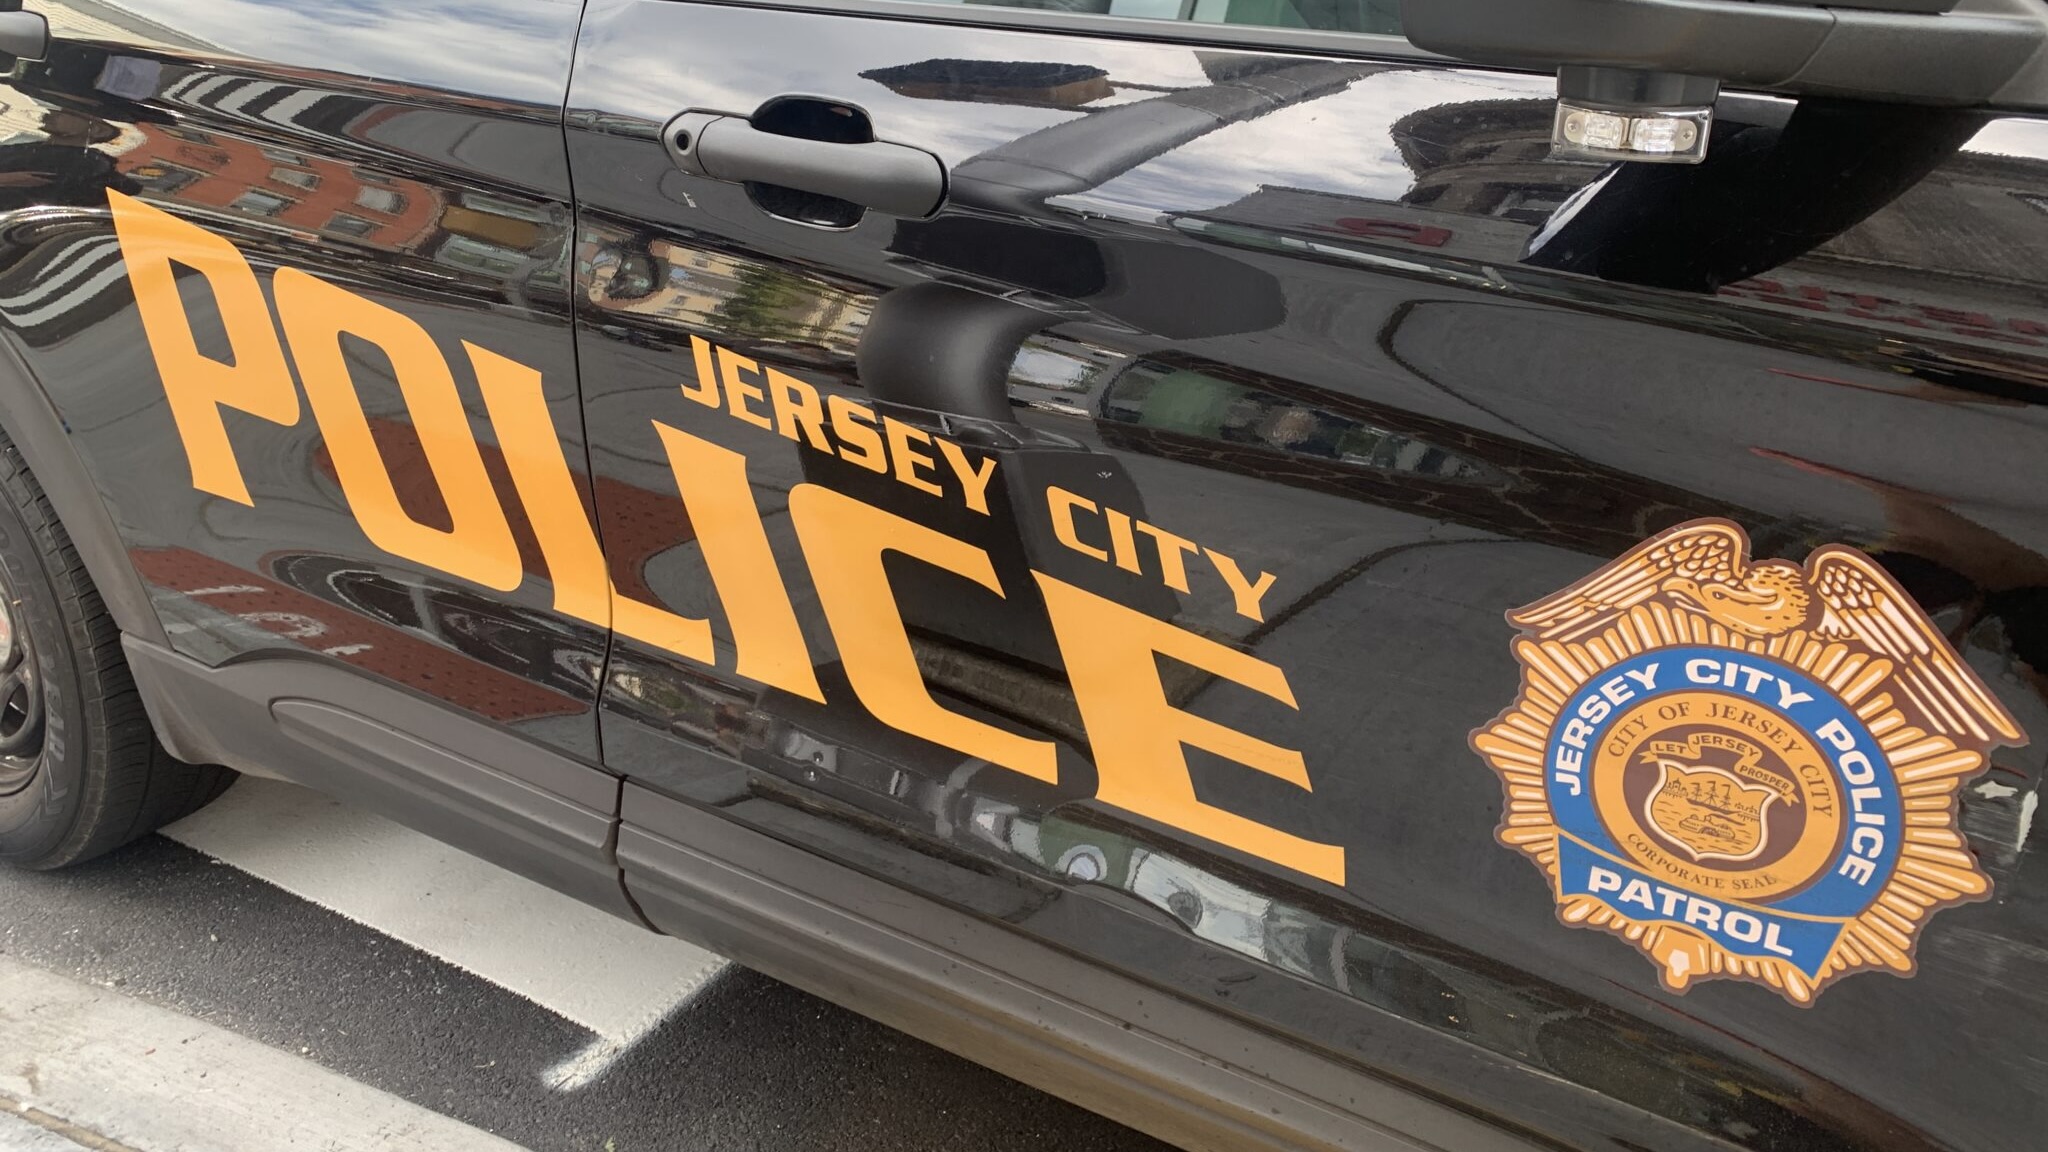 Jersey City Patrol Car